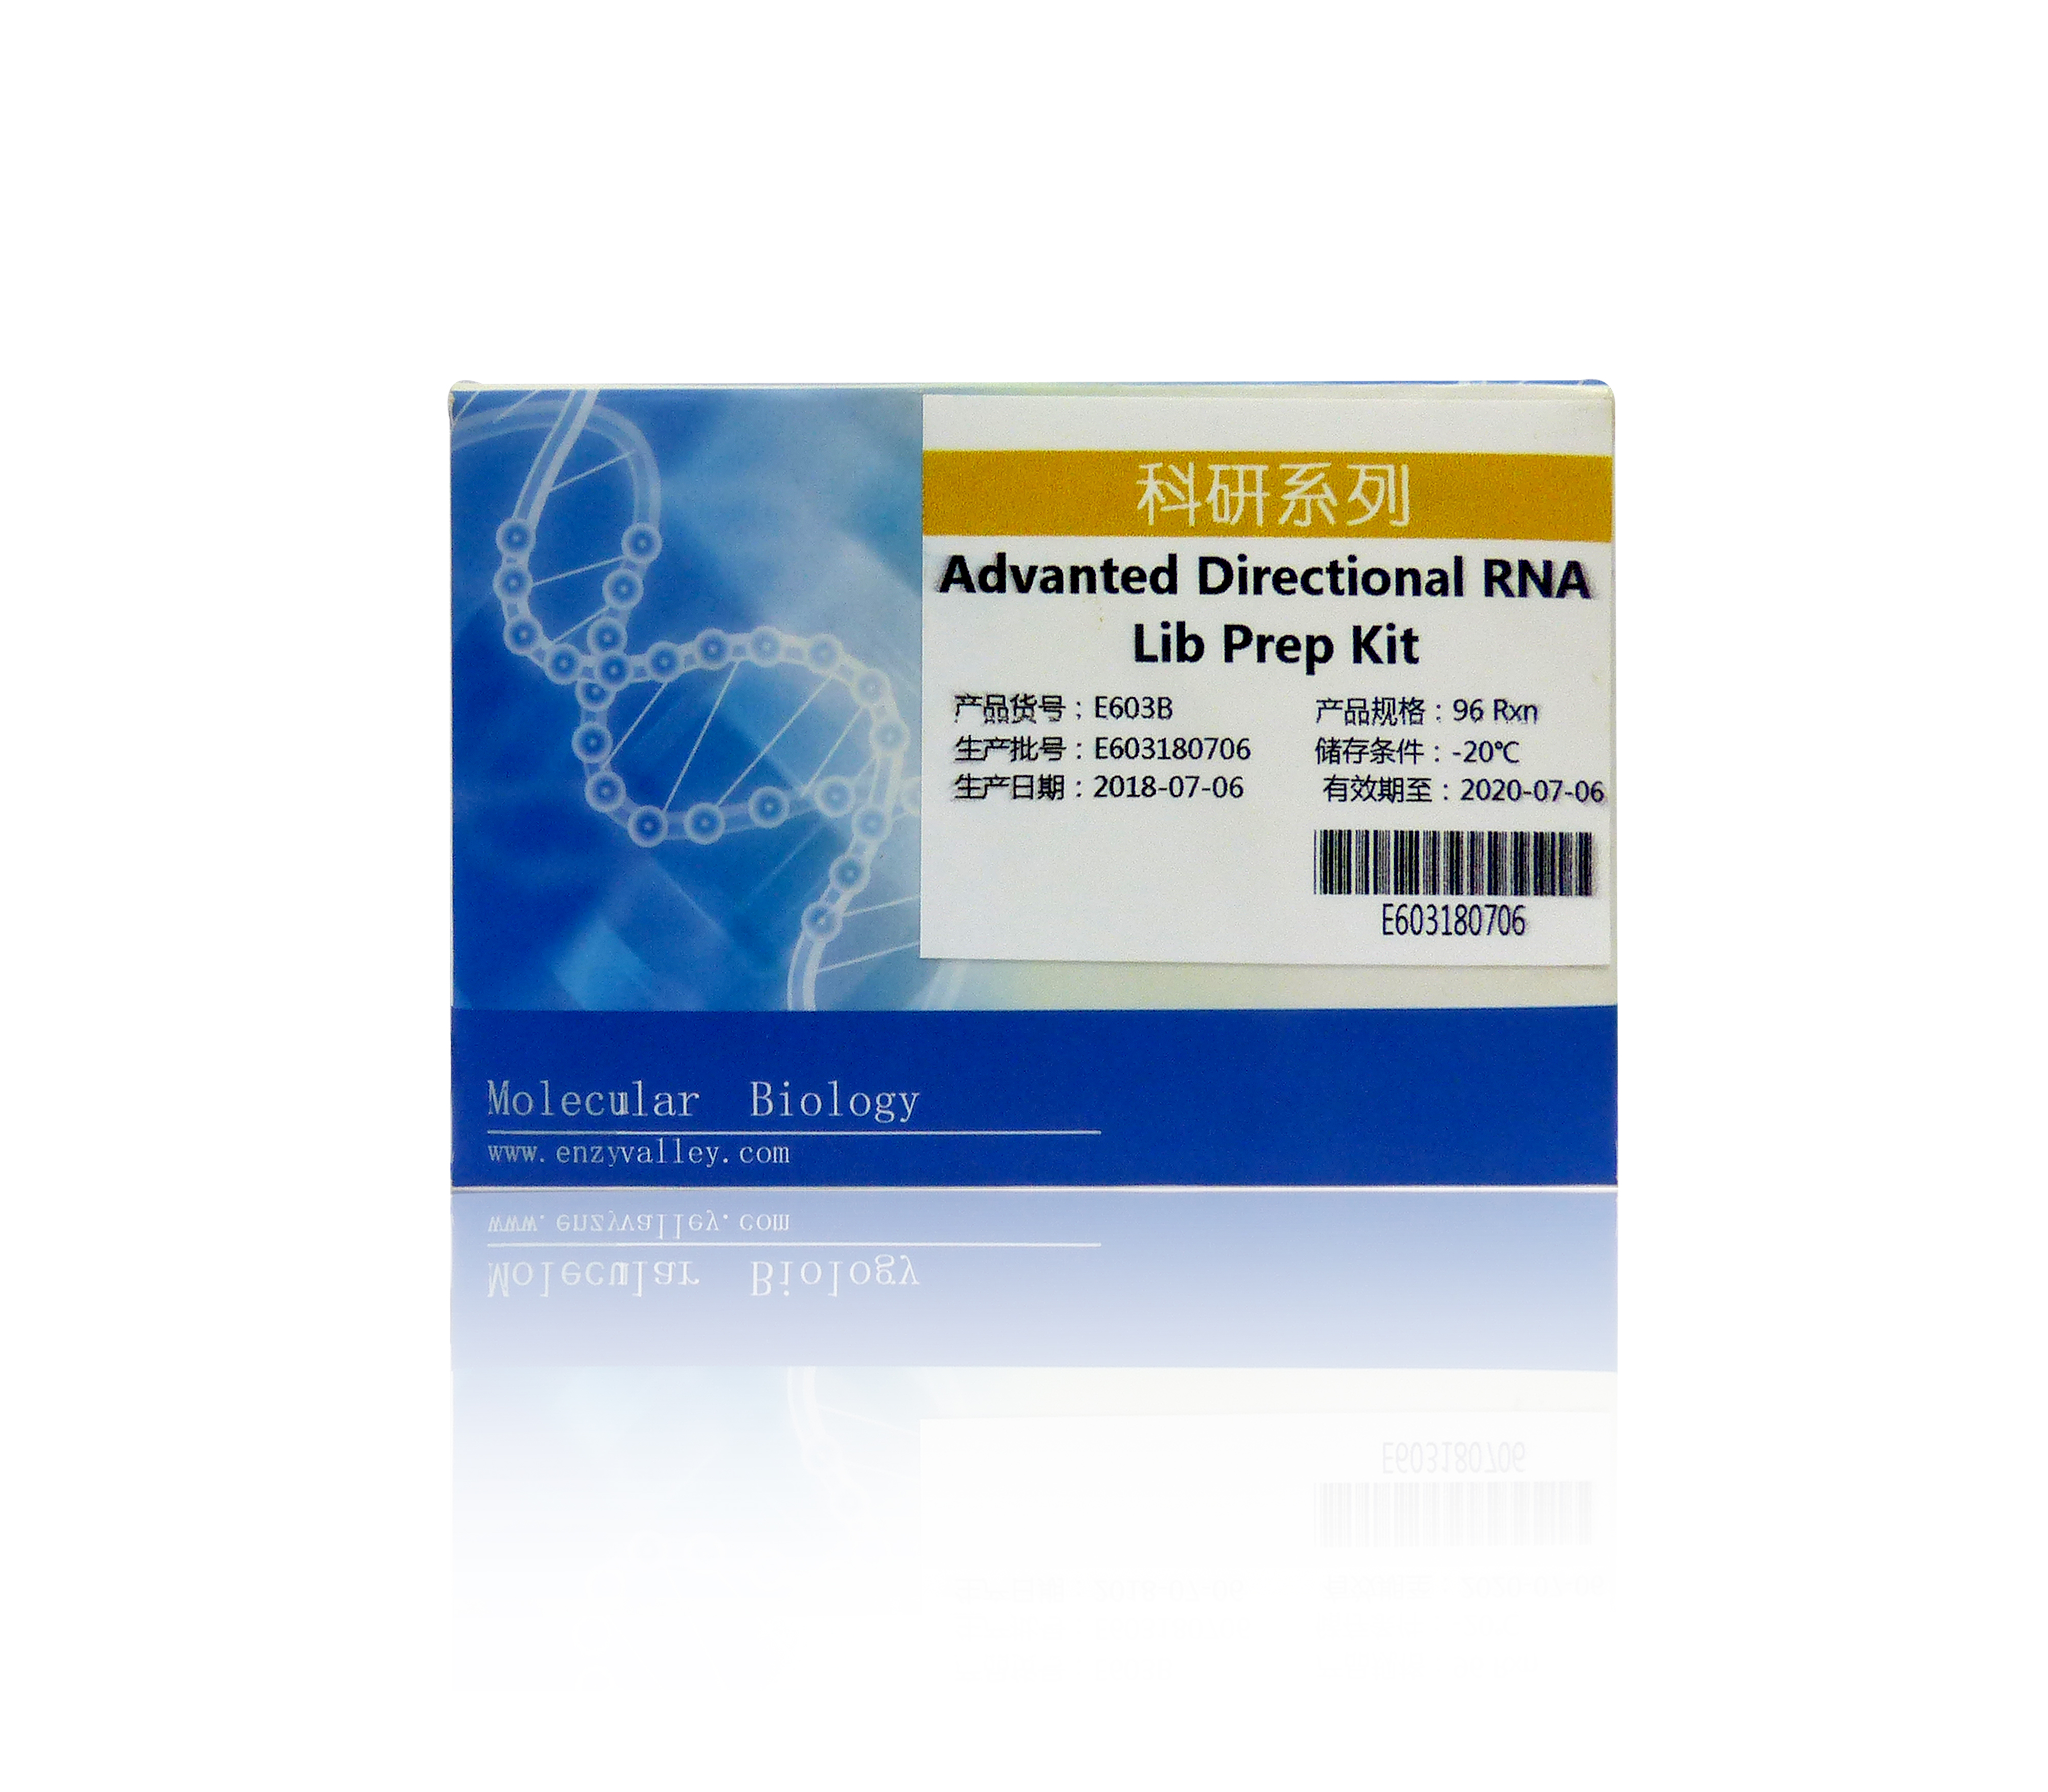 定向RNA建库试剂盒：Advanted Directional RNA Lib Prep Kit